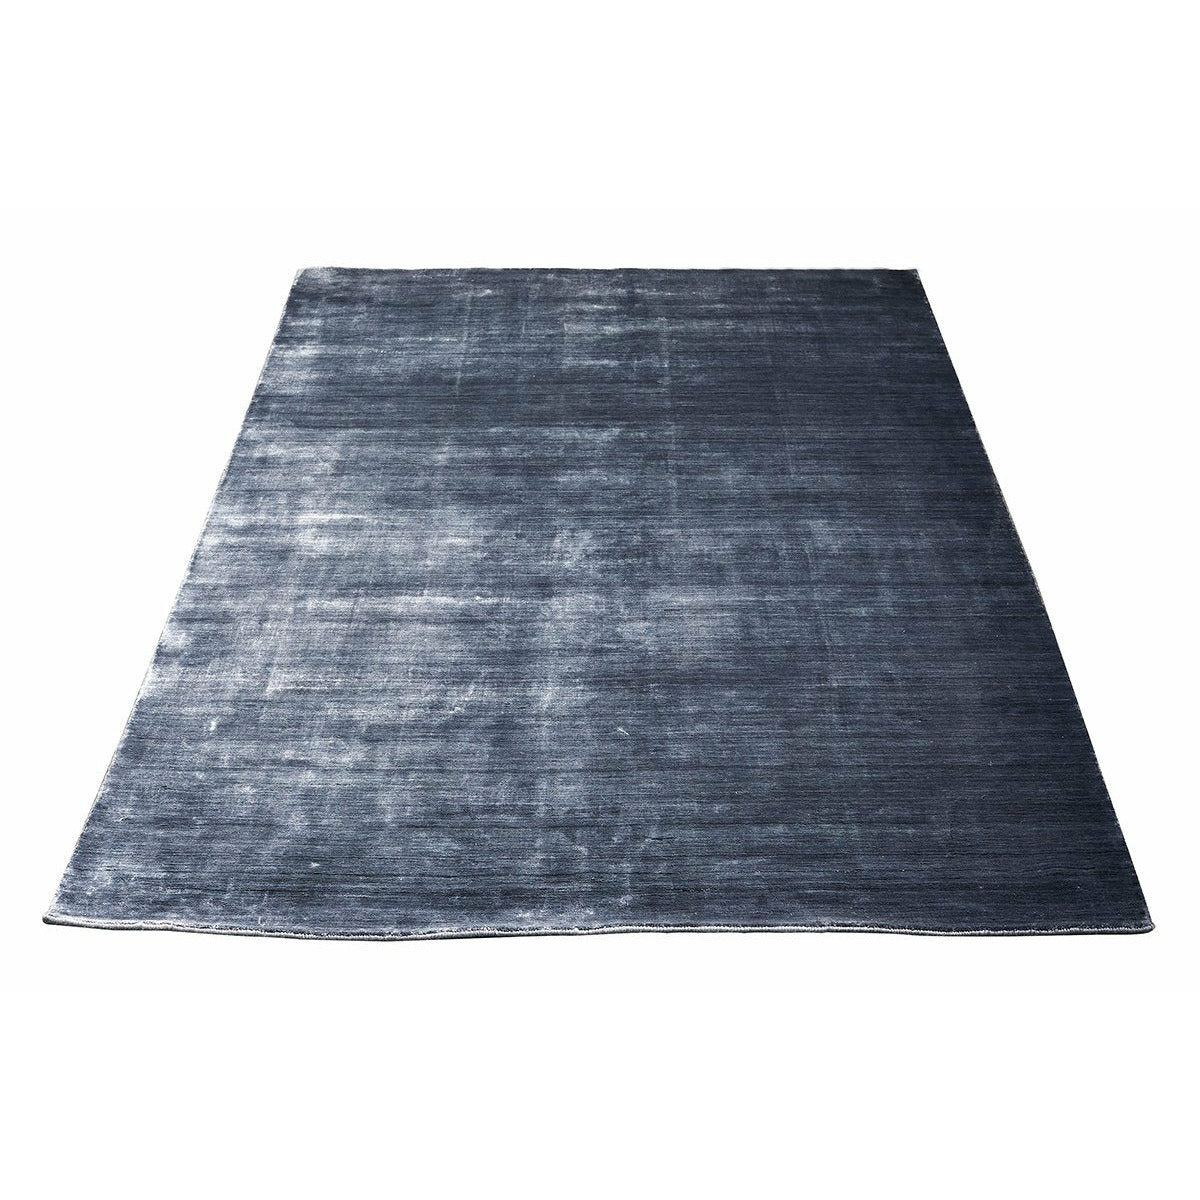 Massimo Bambu mattan stål svart, 140x200 cm